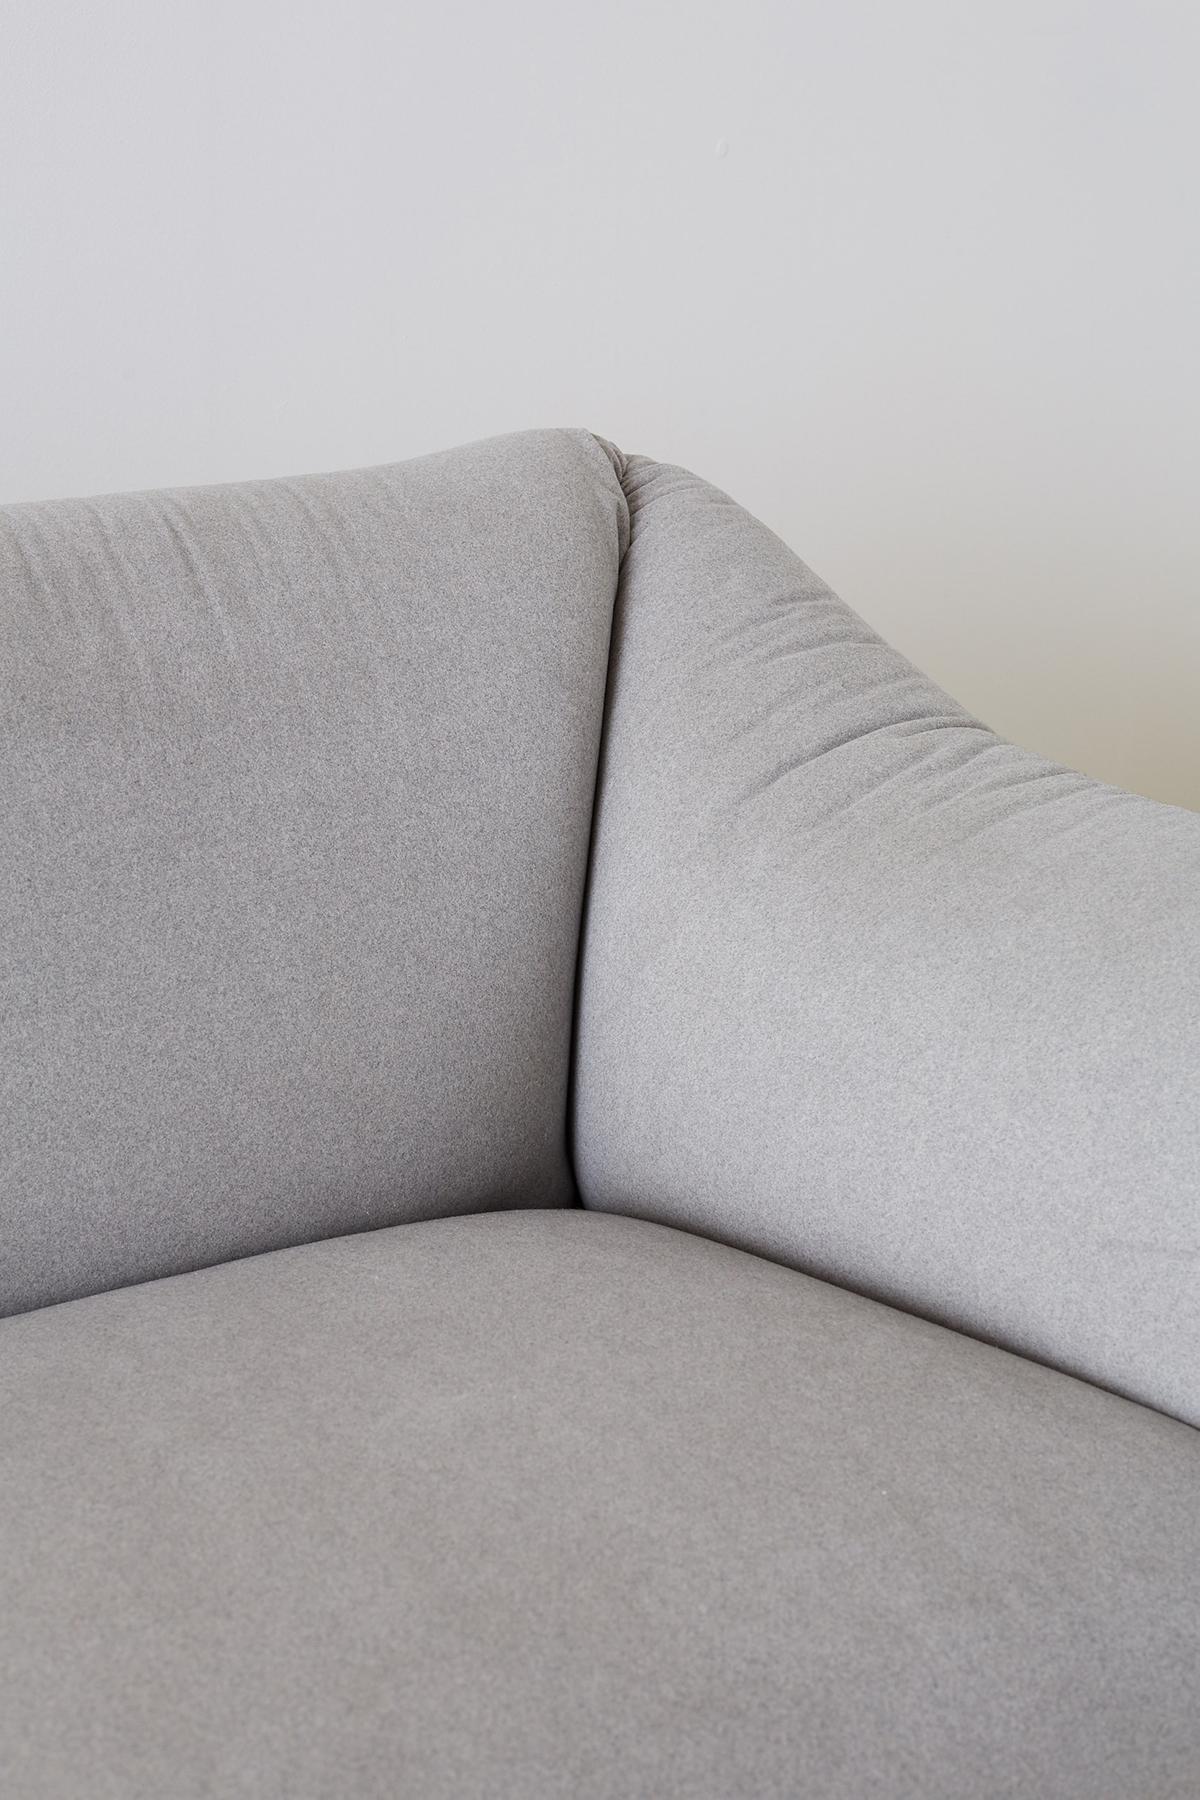 20th Century Mario Bellini for Cassina Tentazione Upholstered Sofa